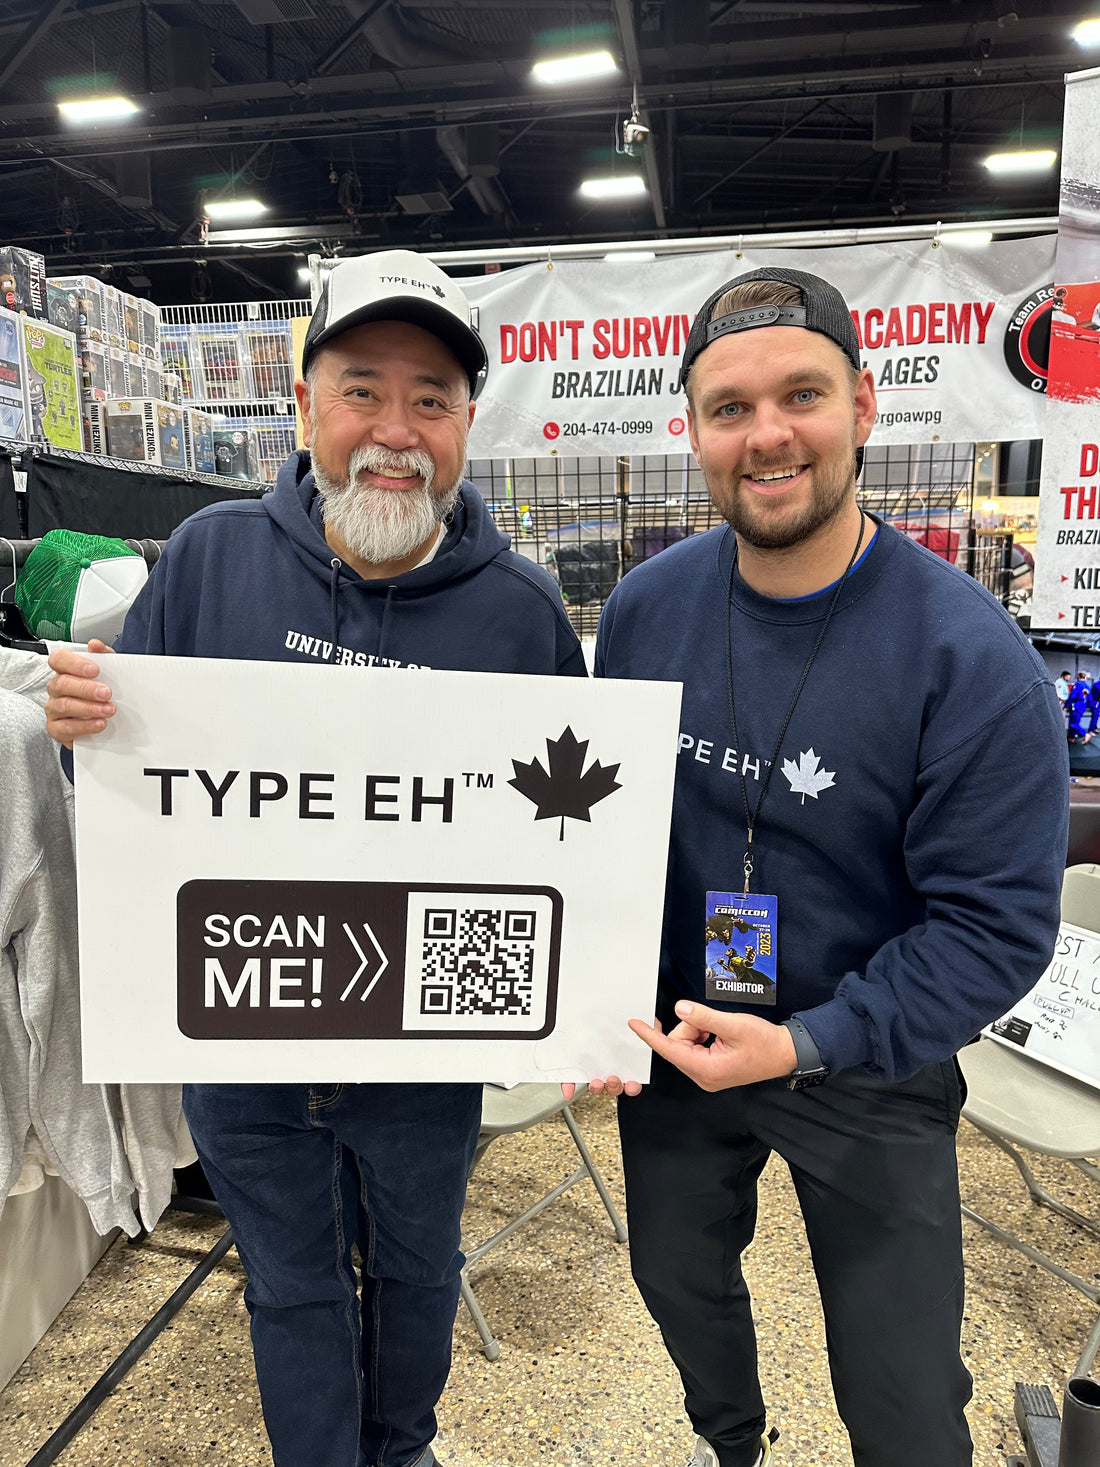 Type eh Brand: Having Fun Growing Our Brand at Comic-con in Winnipeg